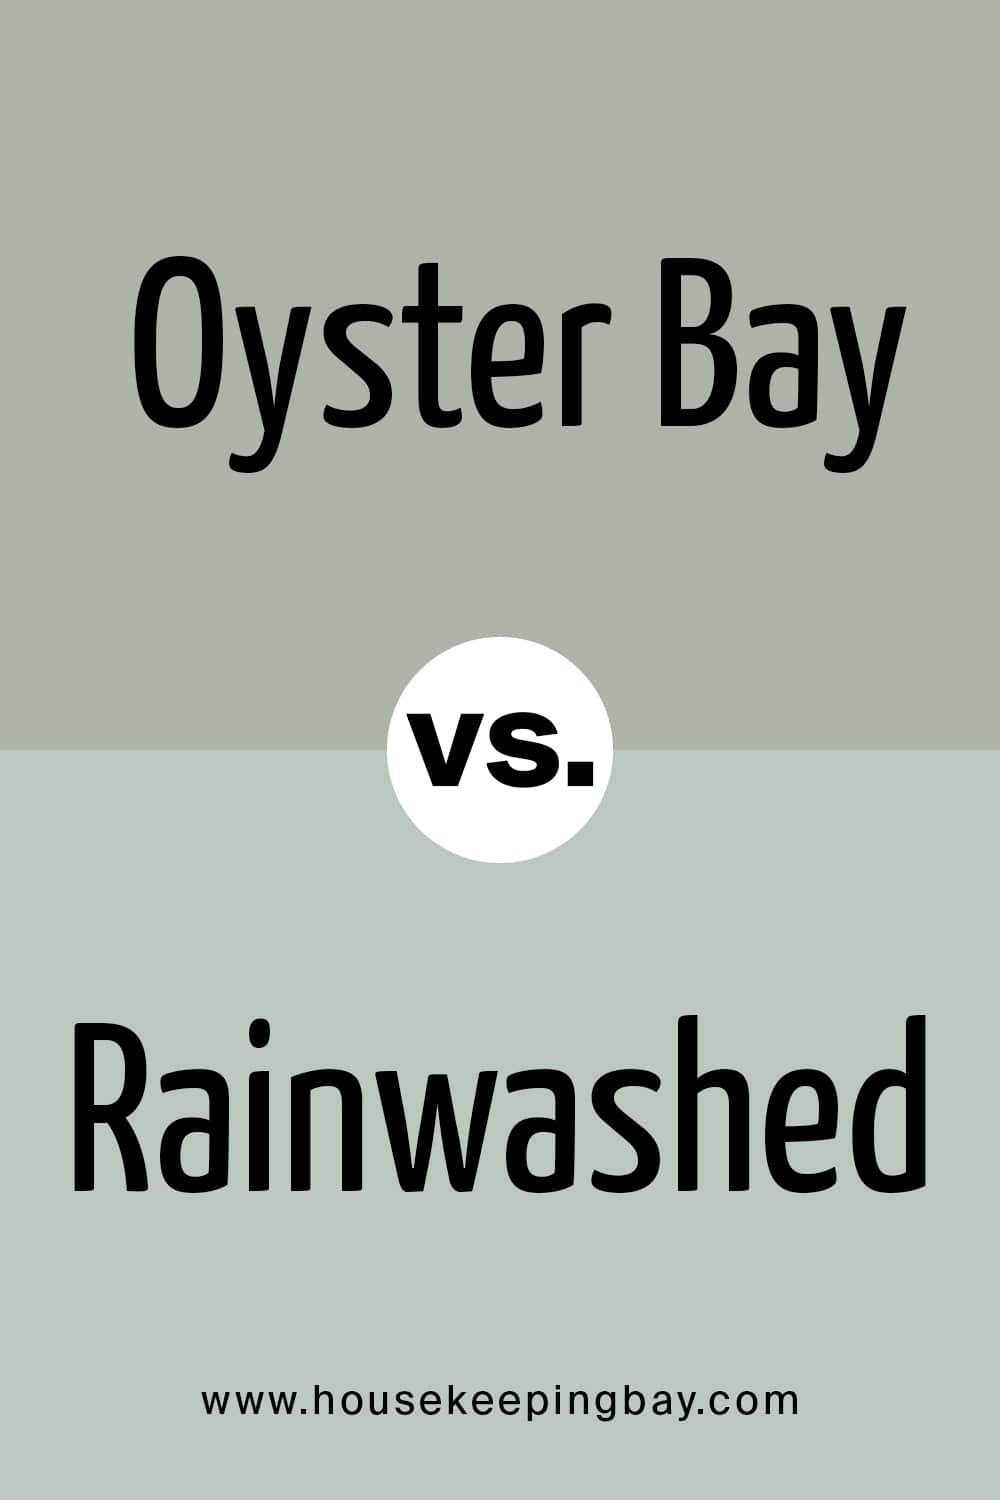 Oyster Bay VS Rainwashed